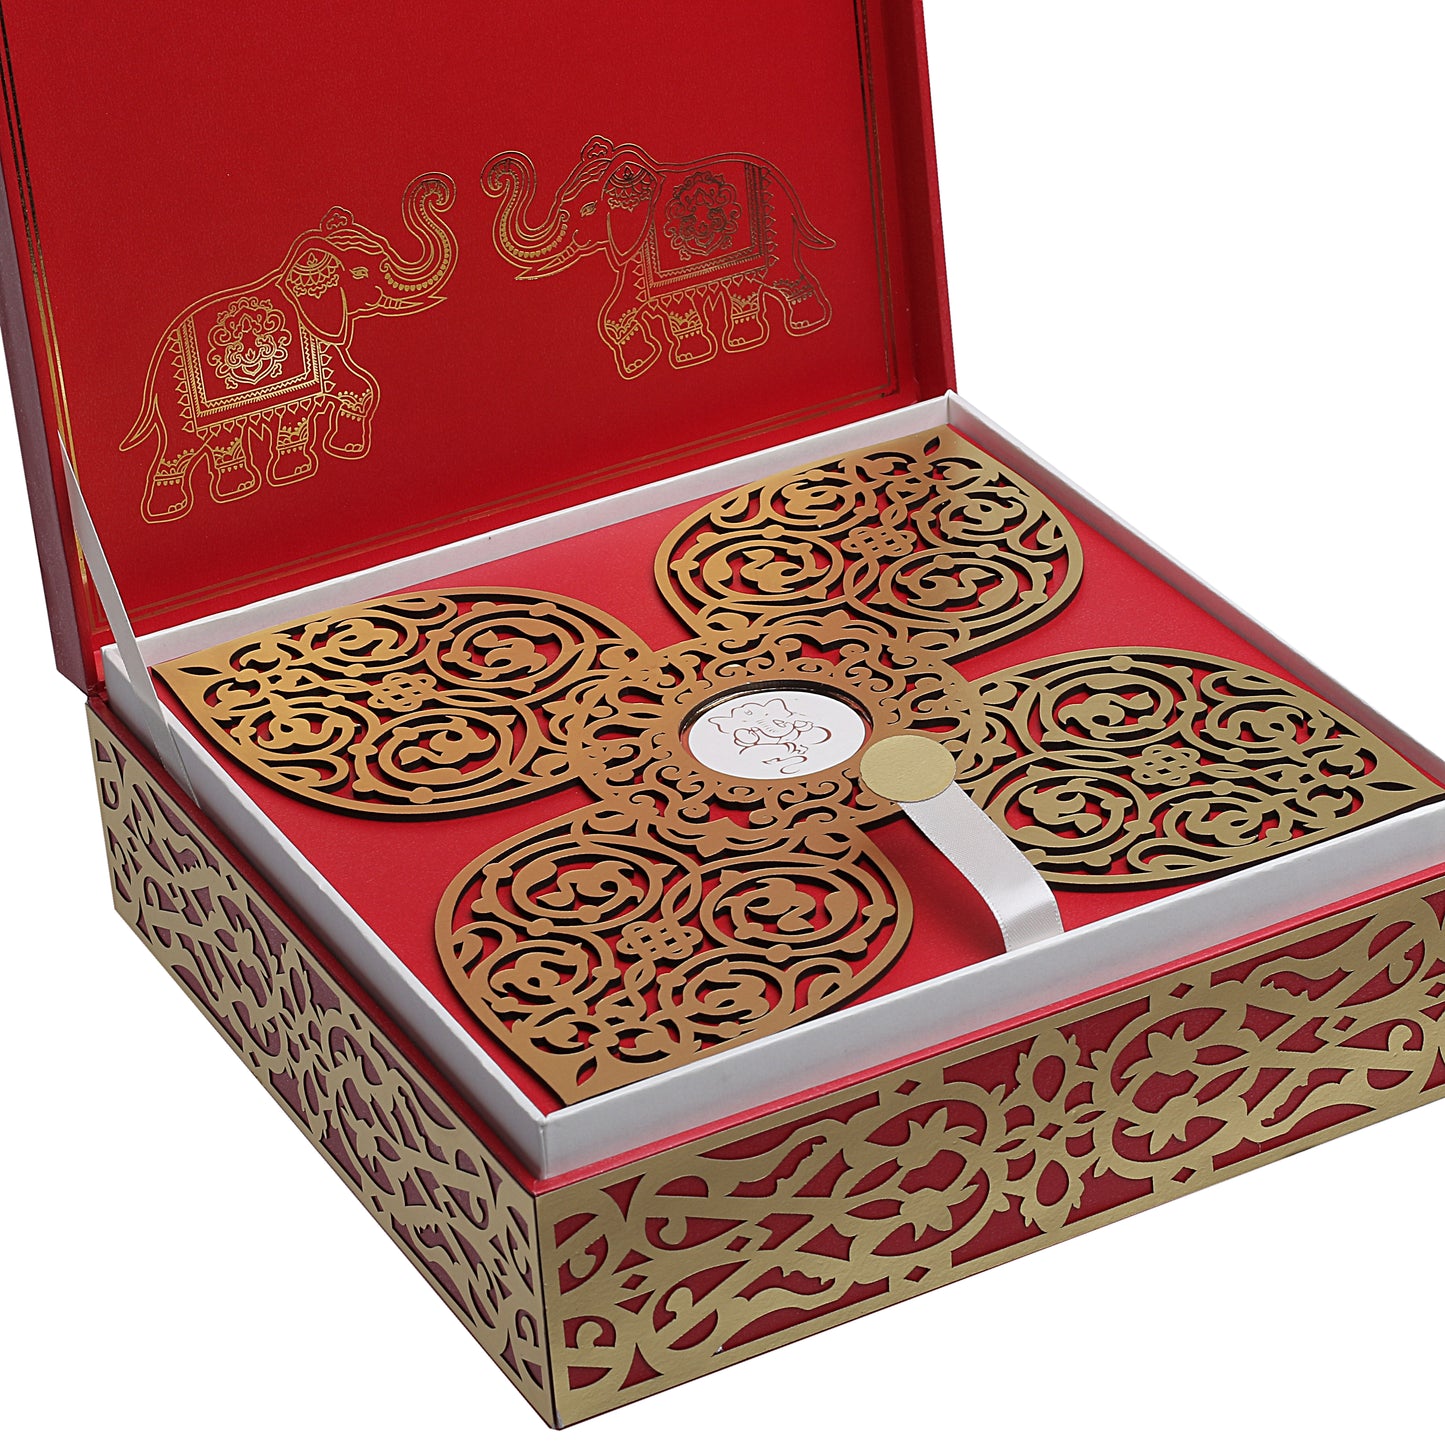 Red Laser Cut Wedding Invitation Box